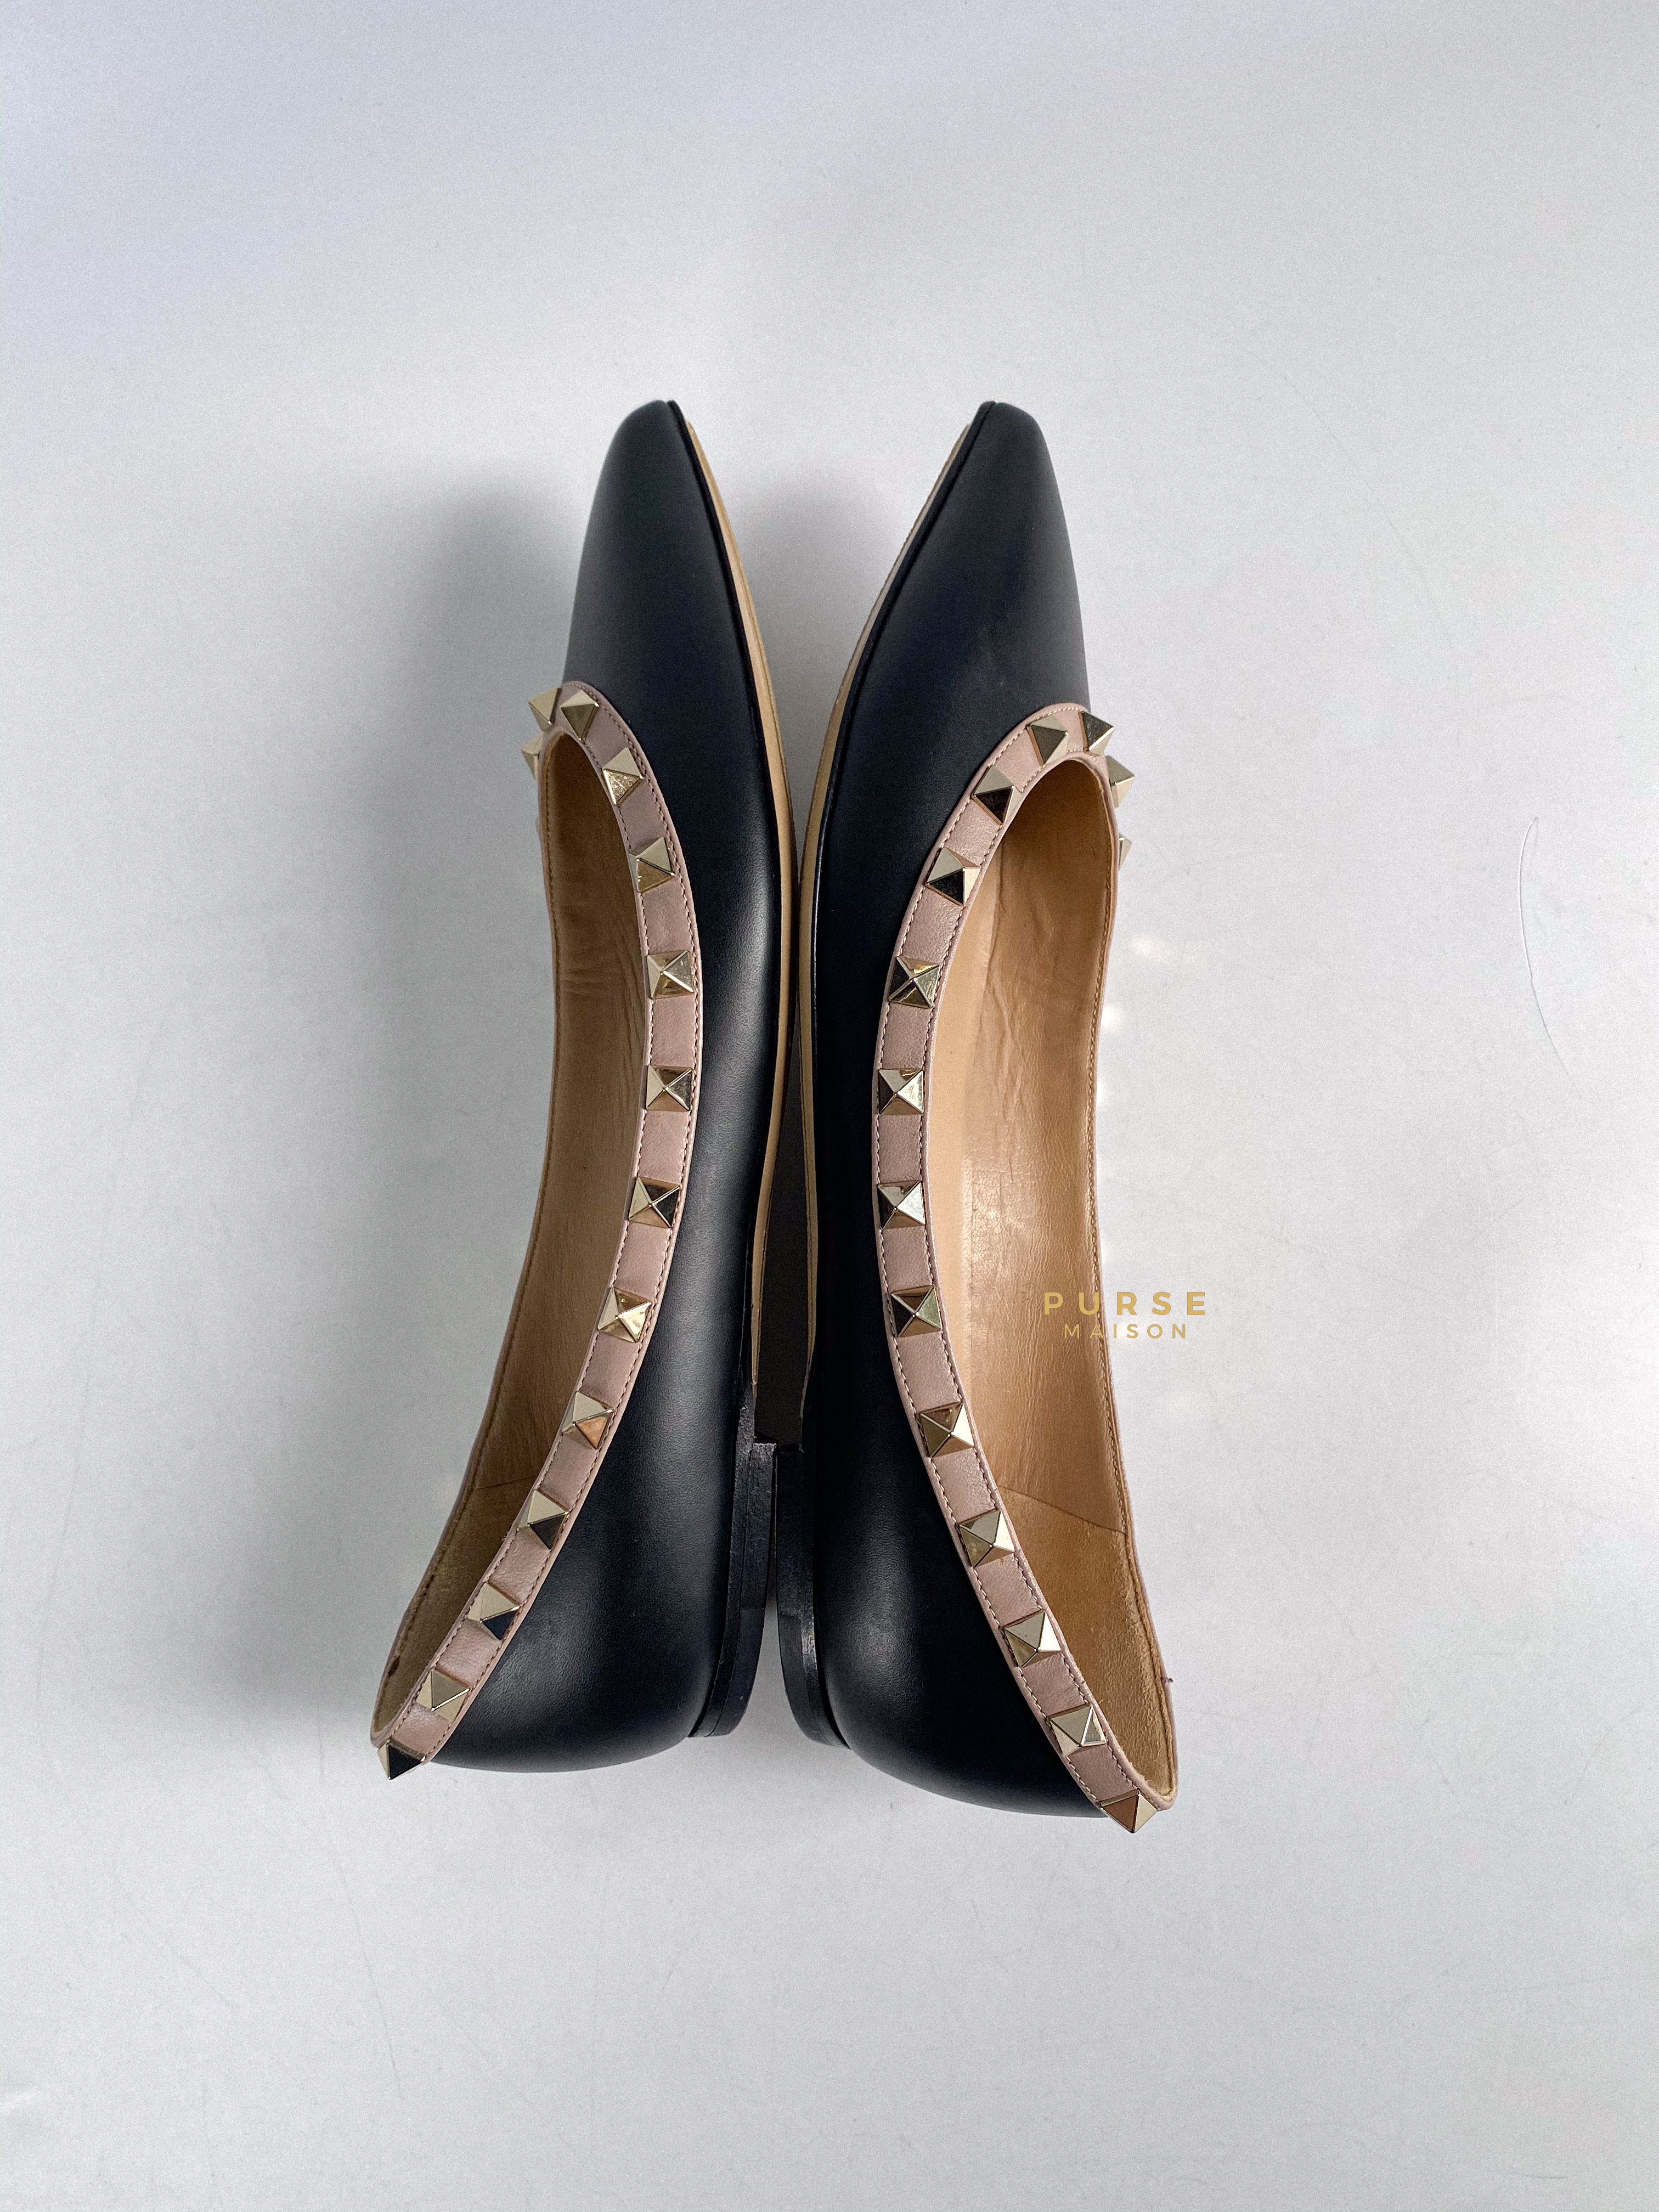 Valentino Rockstud Ballerina Flat Shoes Size 37.5 EU (25cm)